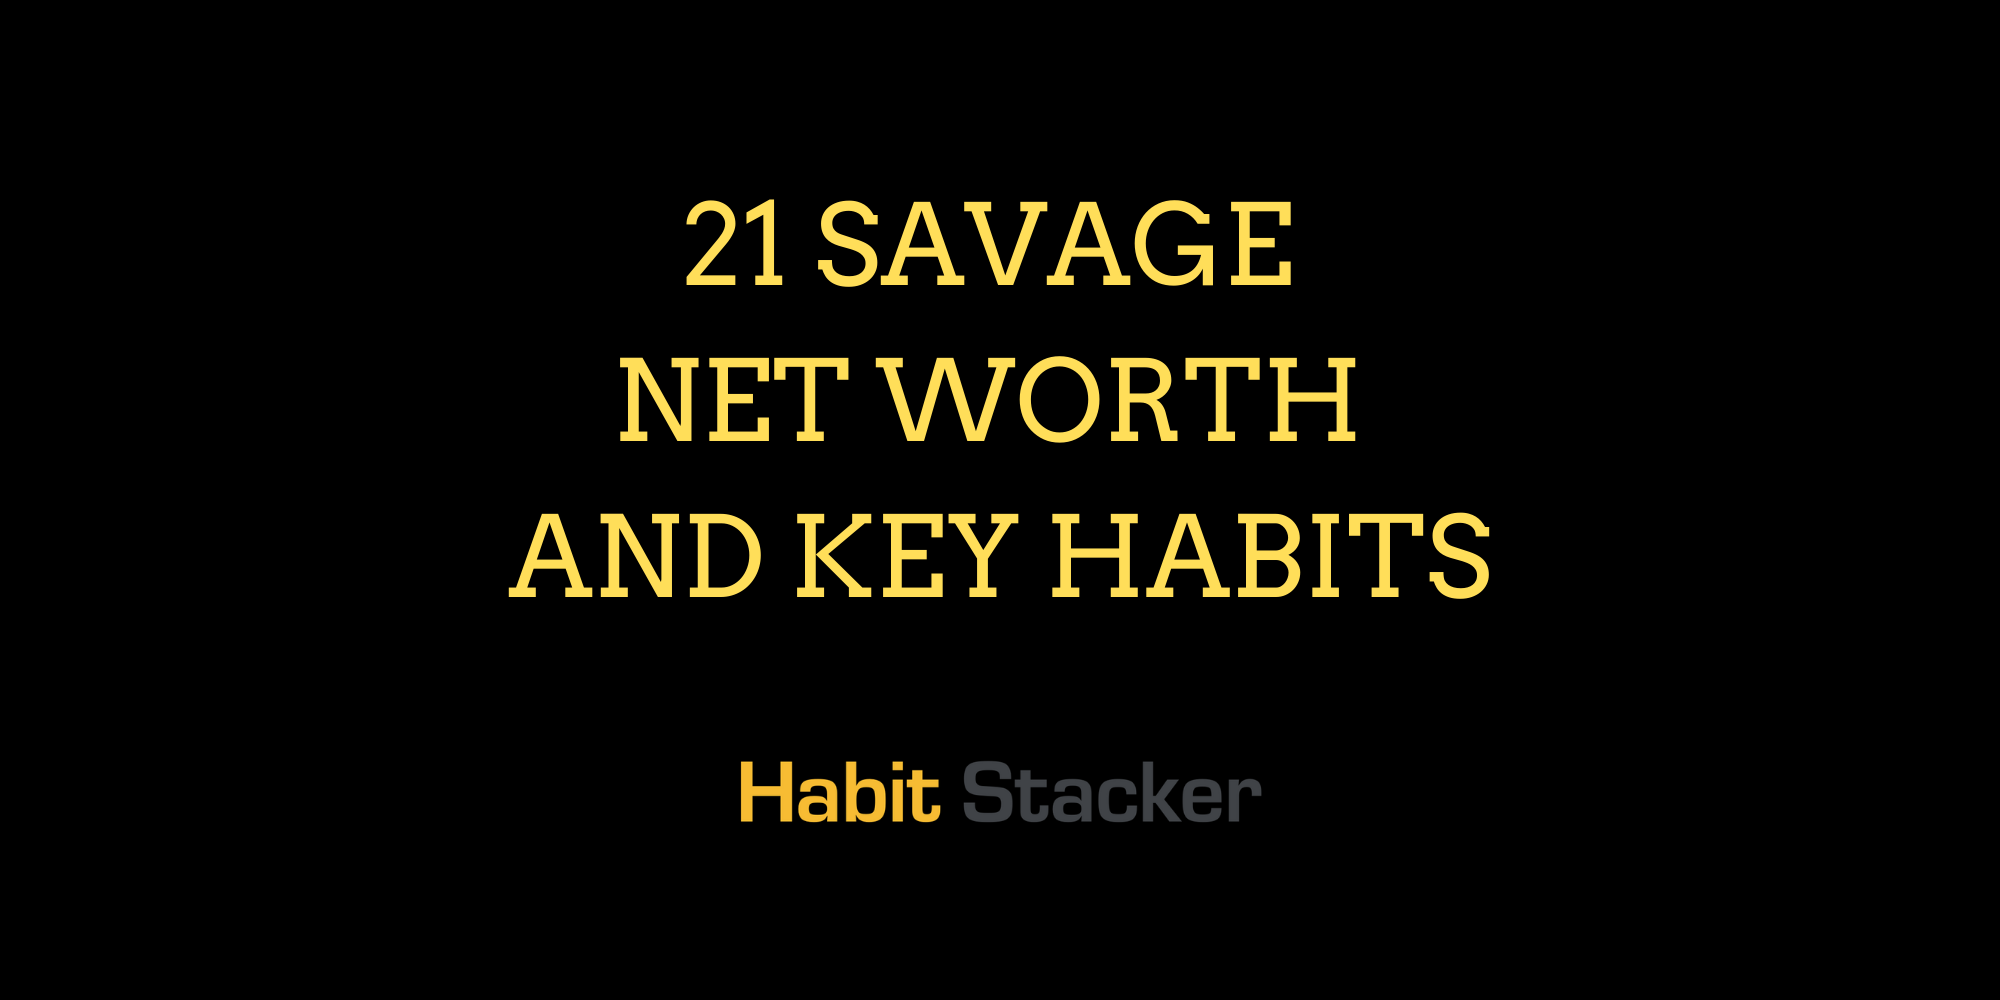 21 Savage Net Worth and Key Habits